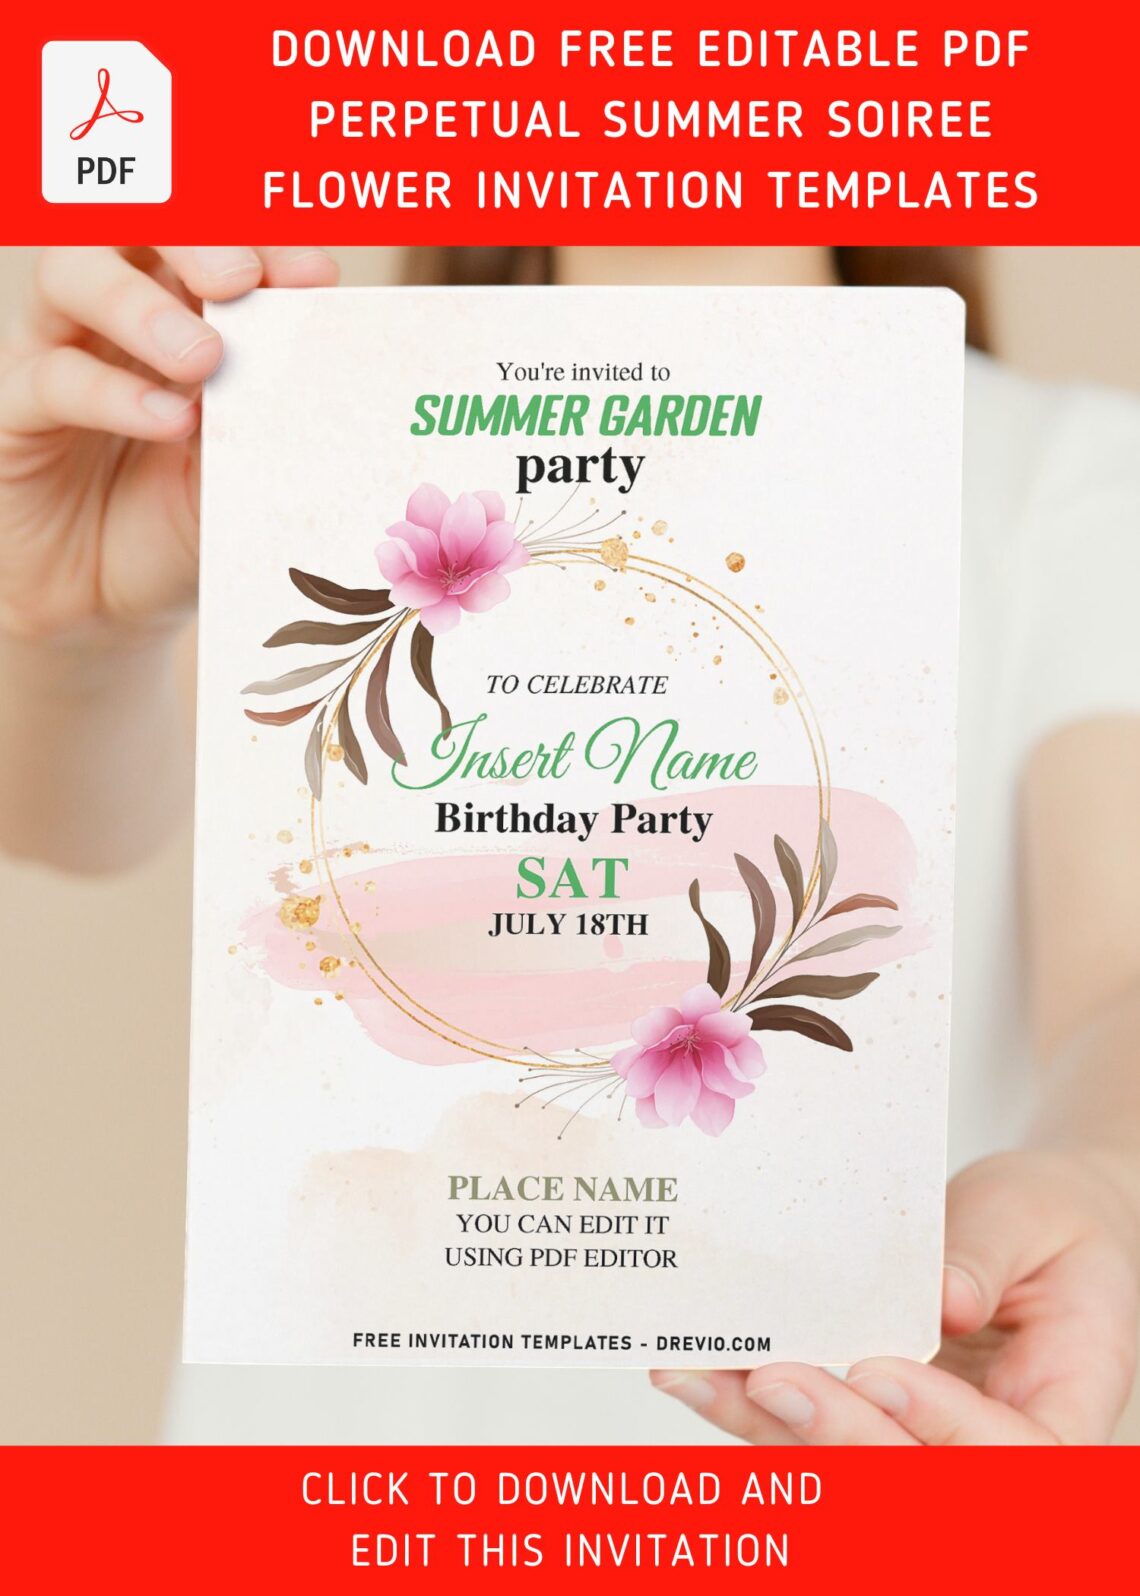 (Free Editable PDF) Perpetual Summer Garden Soiree Birthday Invitation Templates with hand drawn flowers